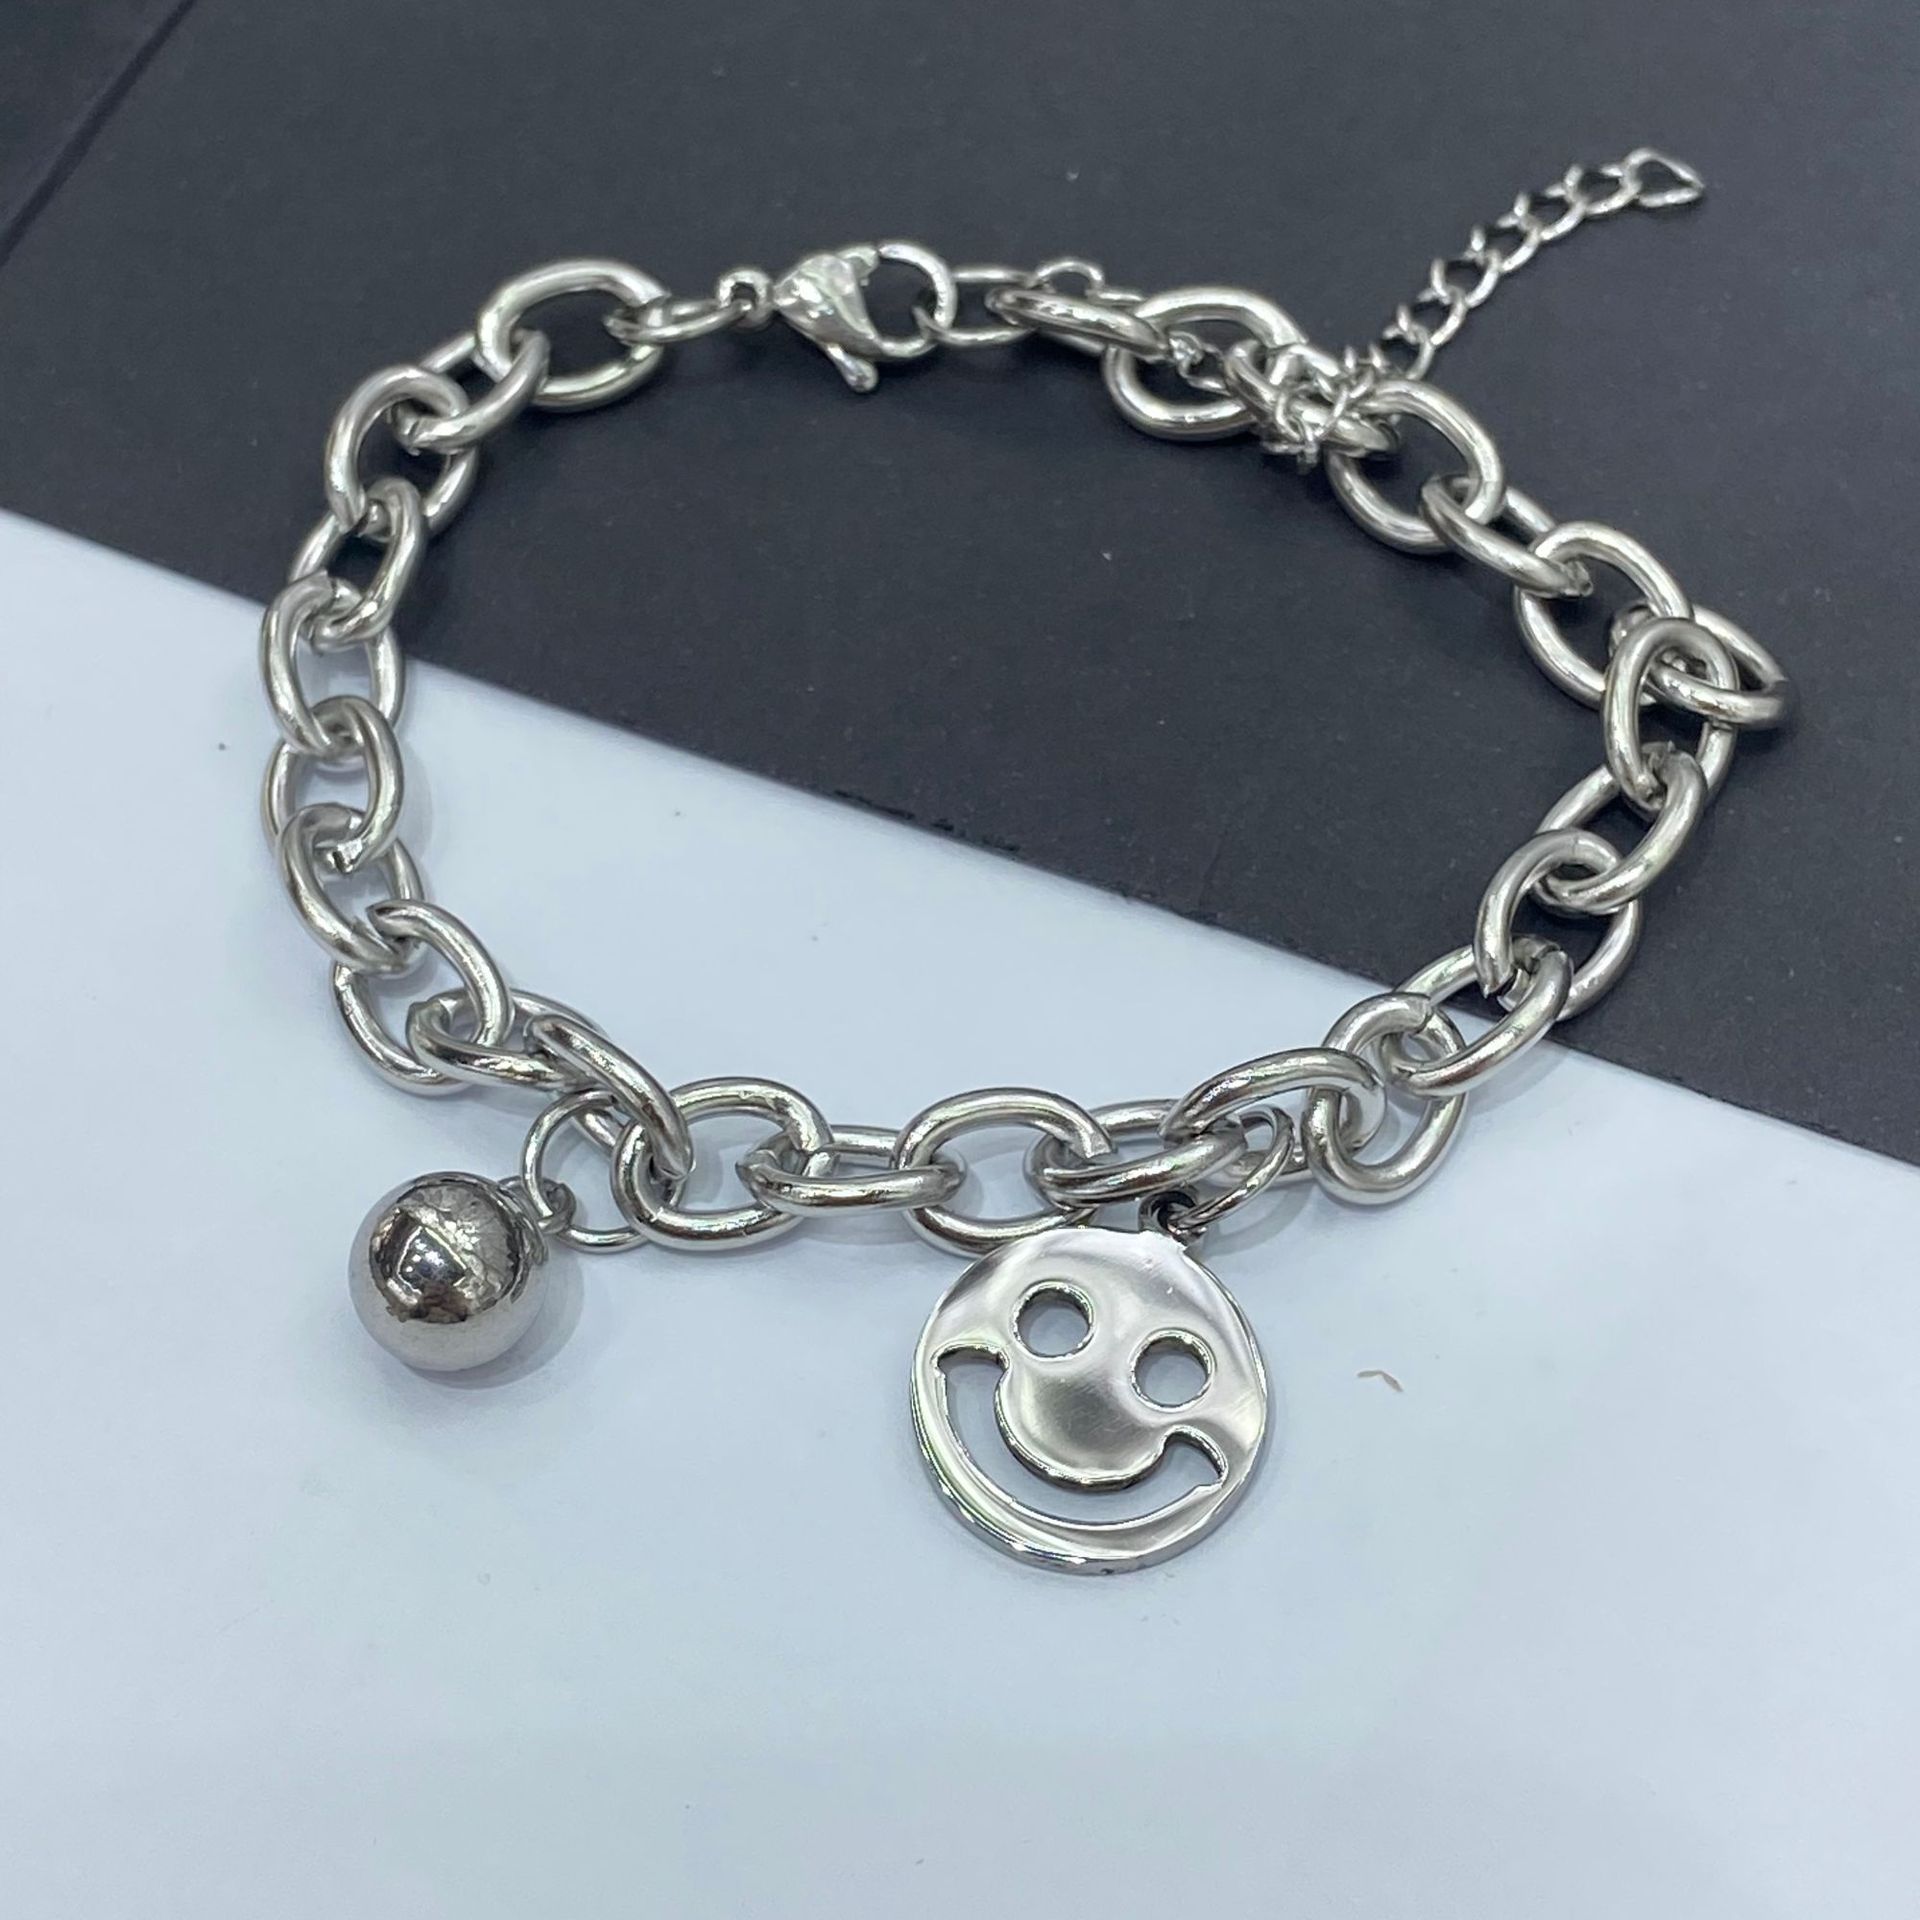 New Double-Layer Titanium Steel Bracelet Hanging Hand Personality Chain Korean Hip-Hop Fashion Chain Punk Heart Bracelet Accessories